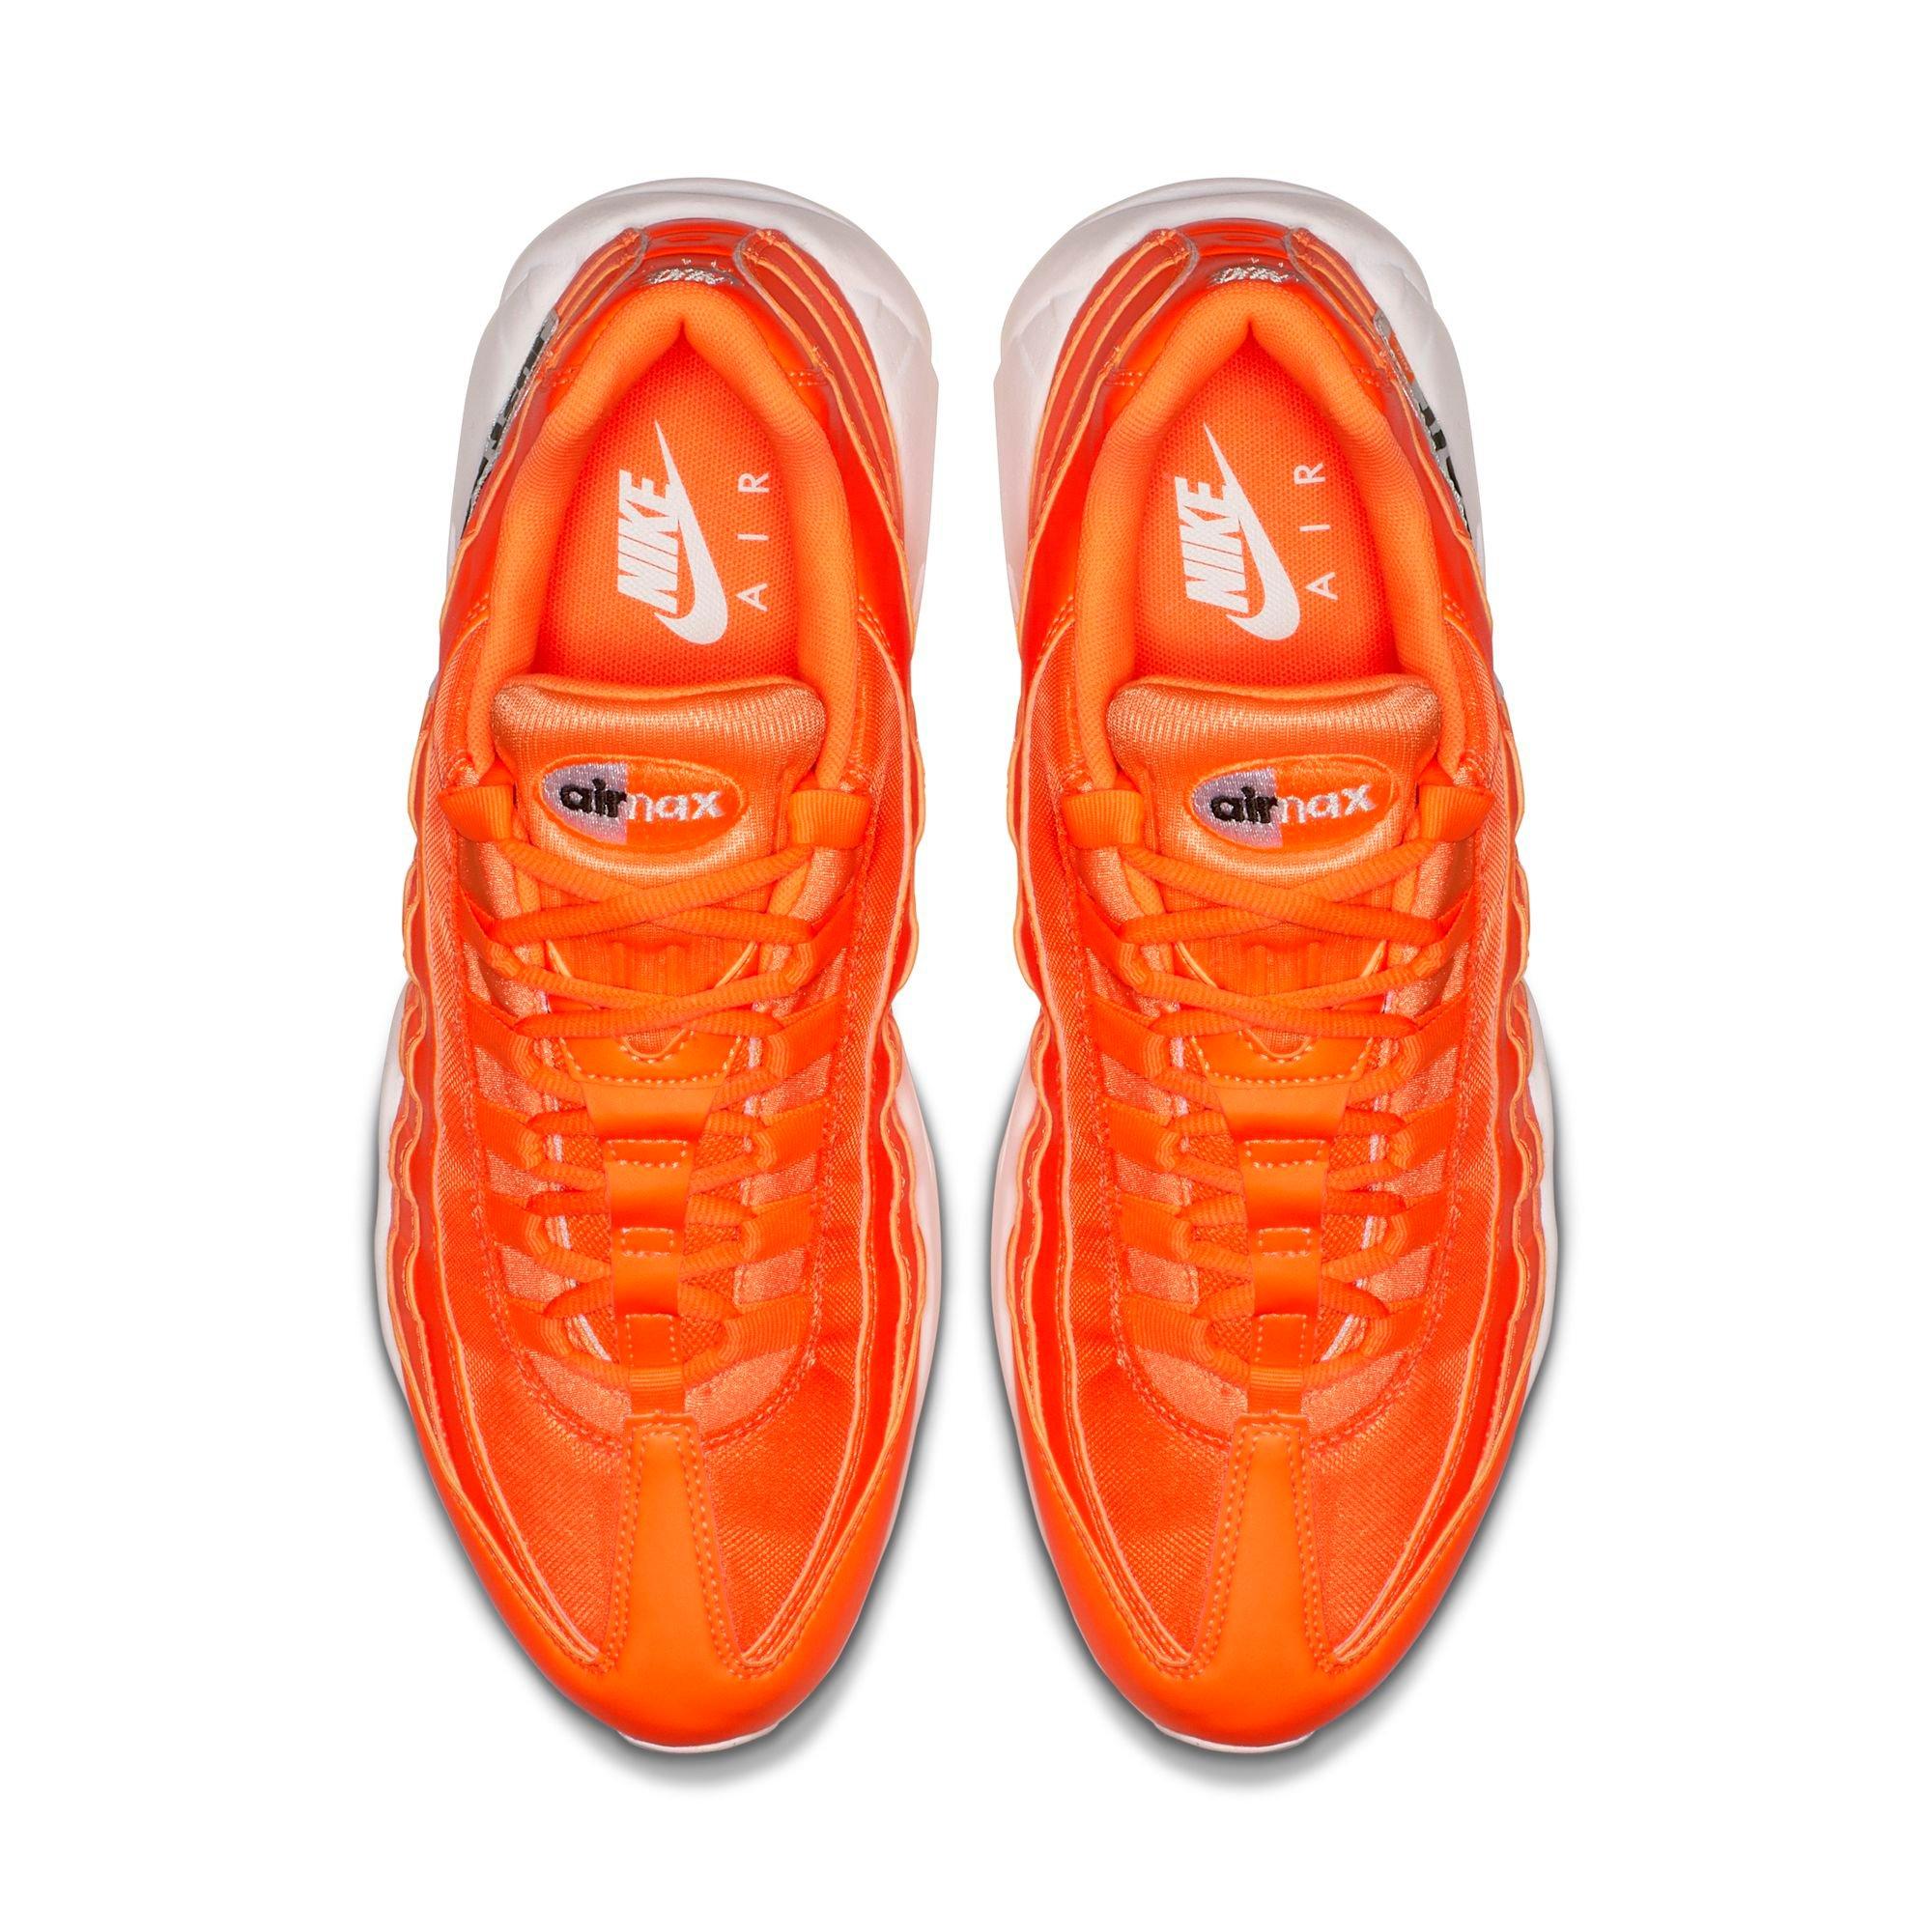 nike air max 95 se jdi orange unisex shoe